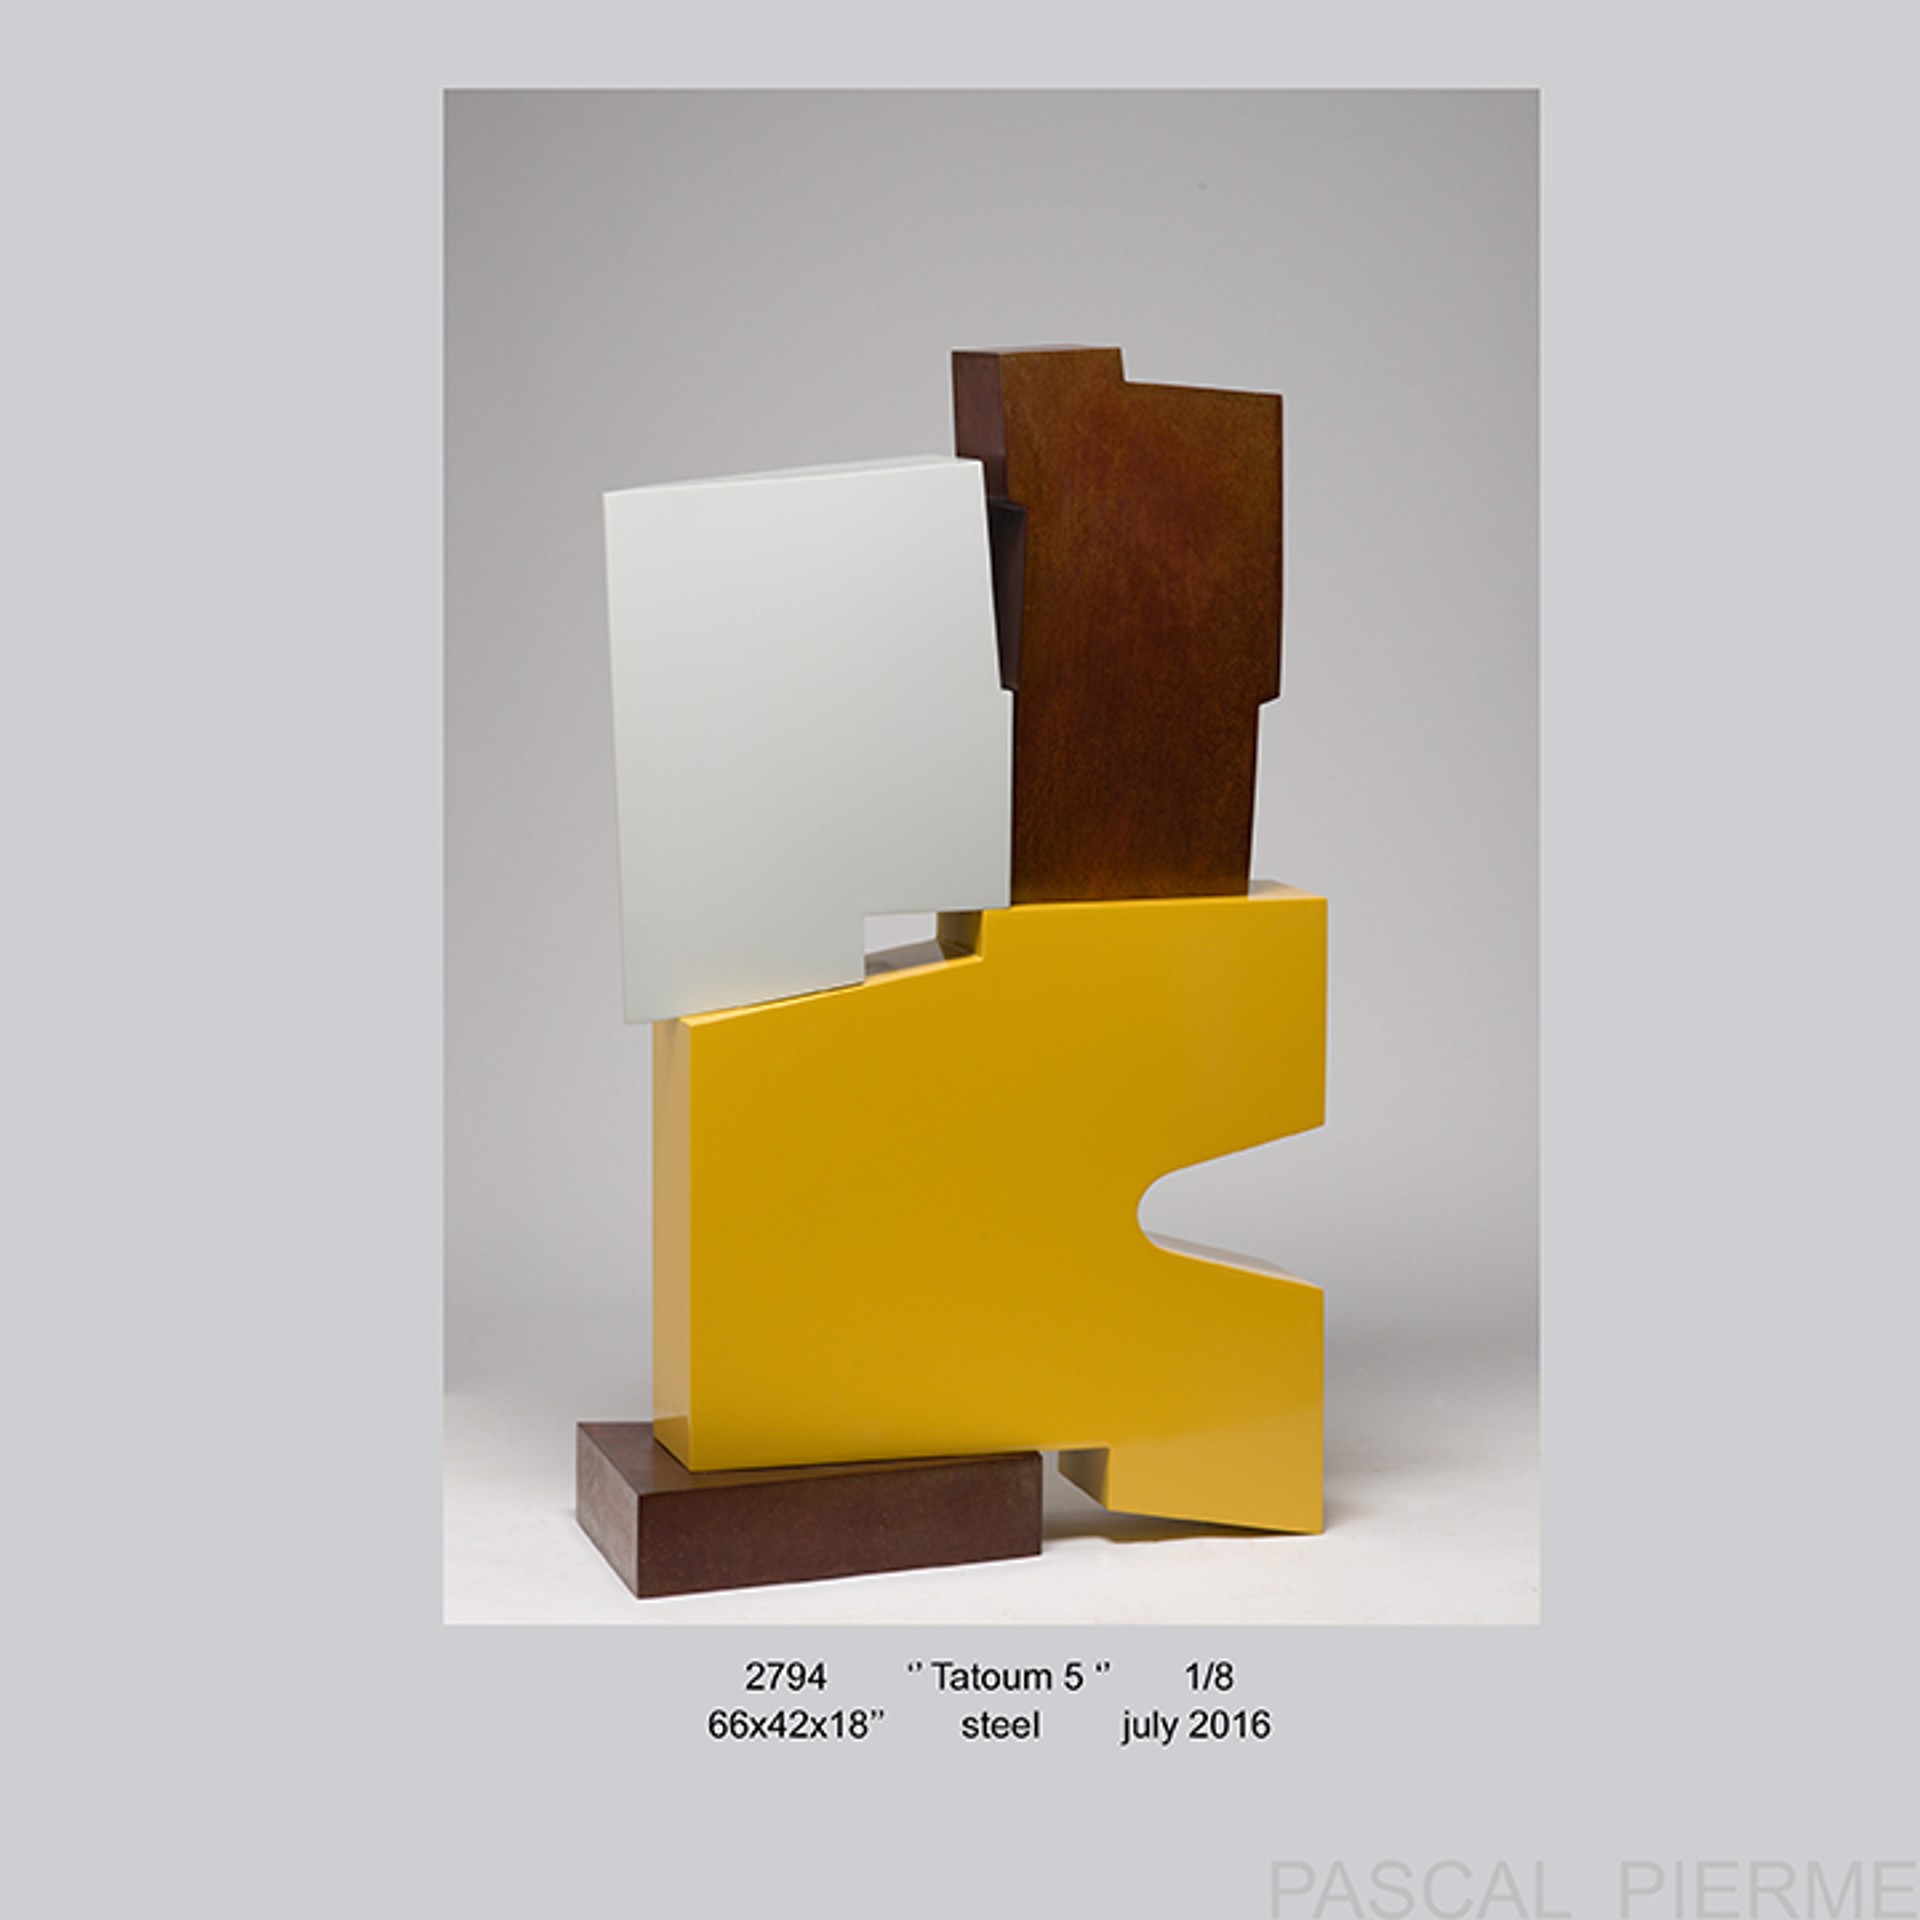 Tatoum 5 Edition 1/8 by Pascal Pierme - Steel